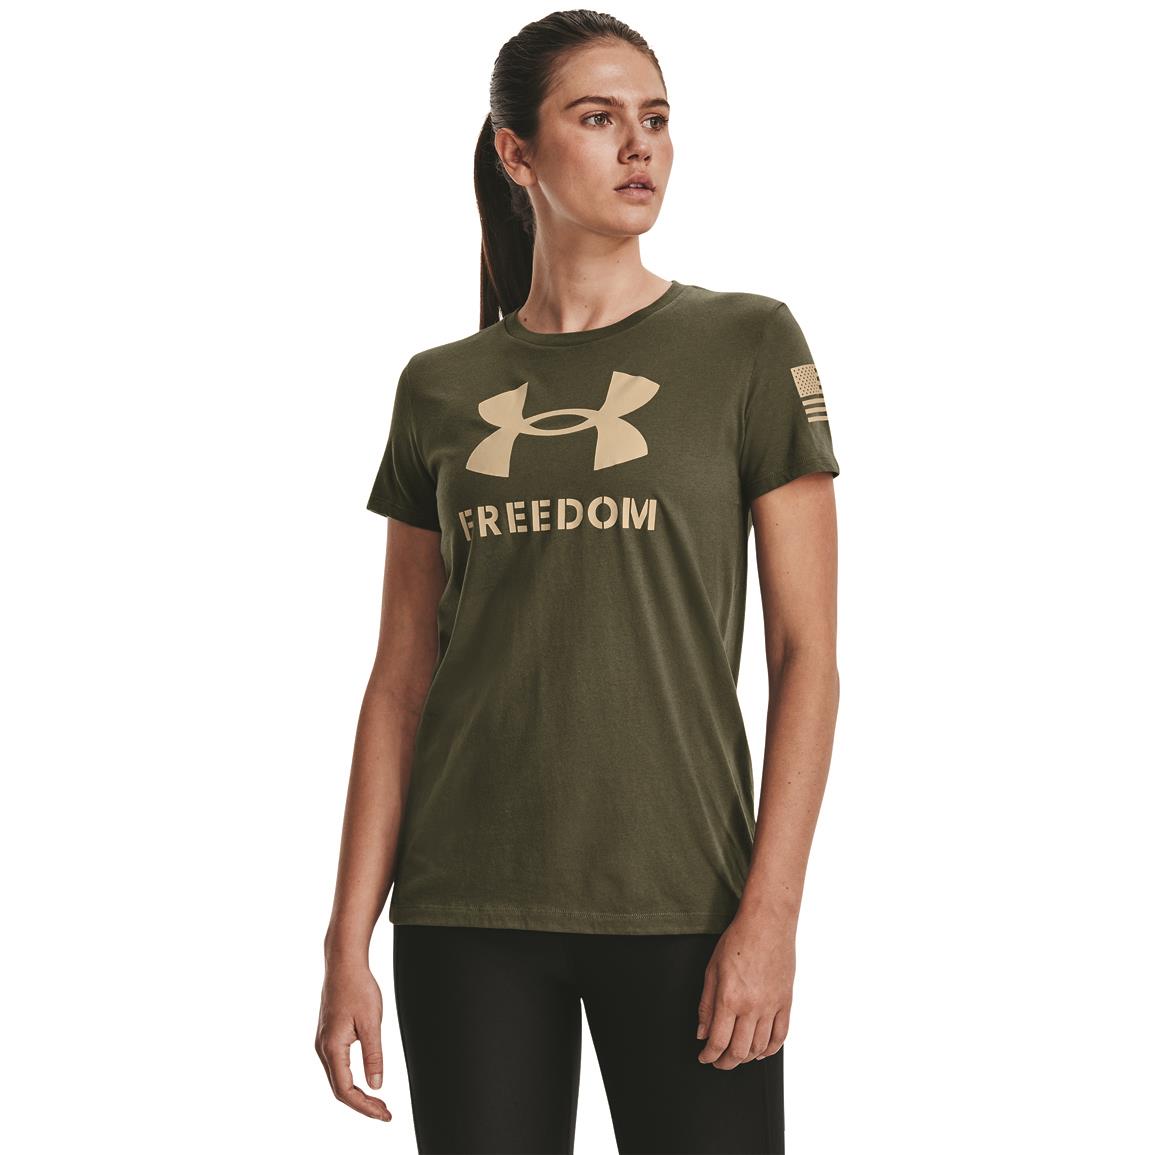 Under Armour Women's UA Freedom Logo T-shirt, Marine OD Green